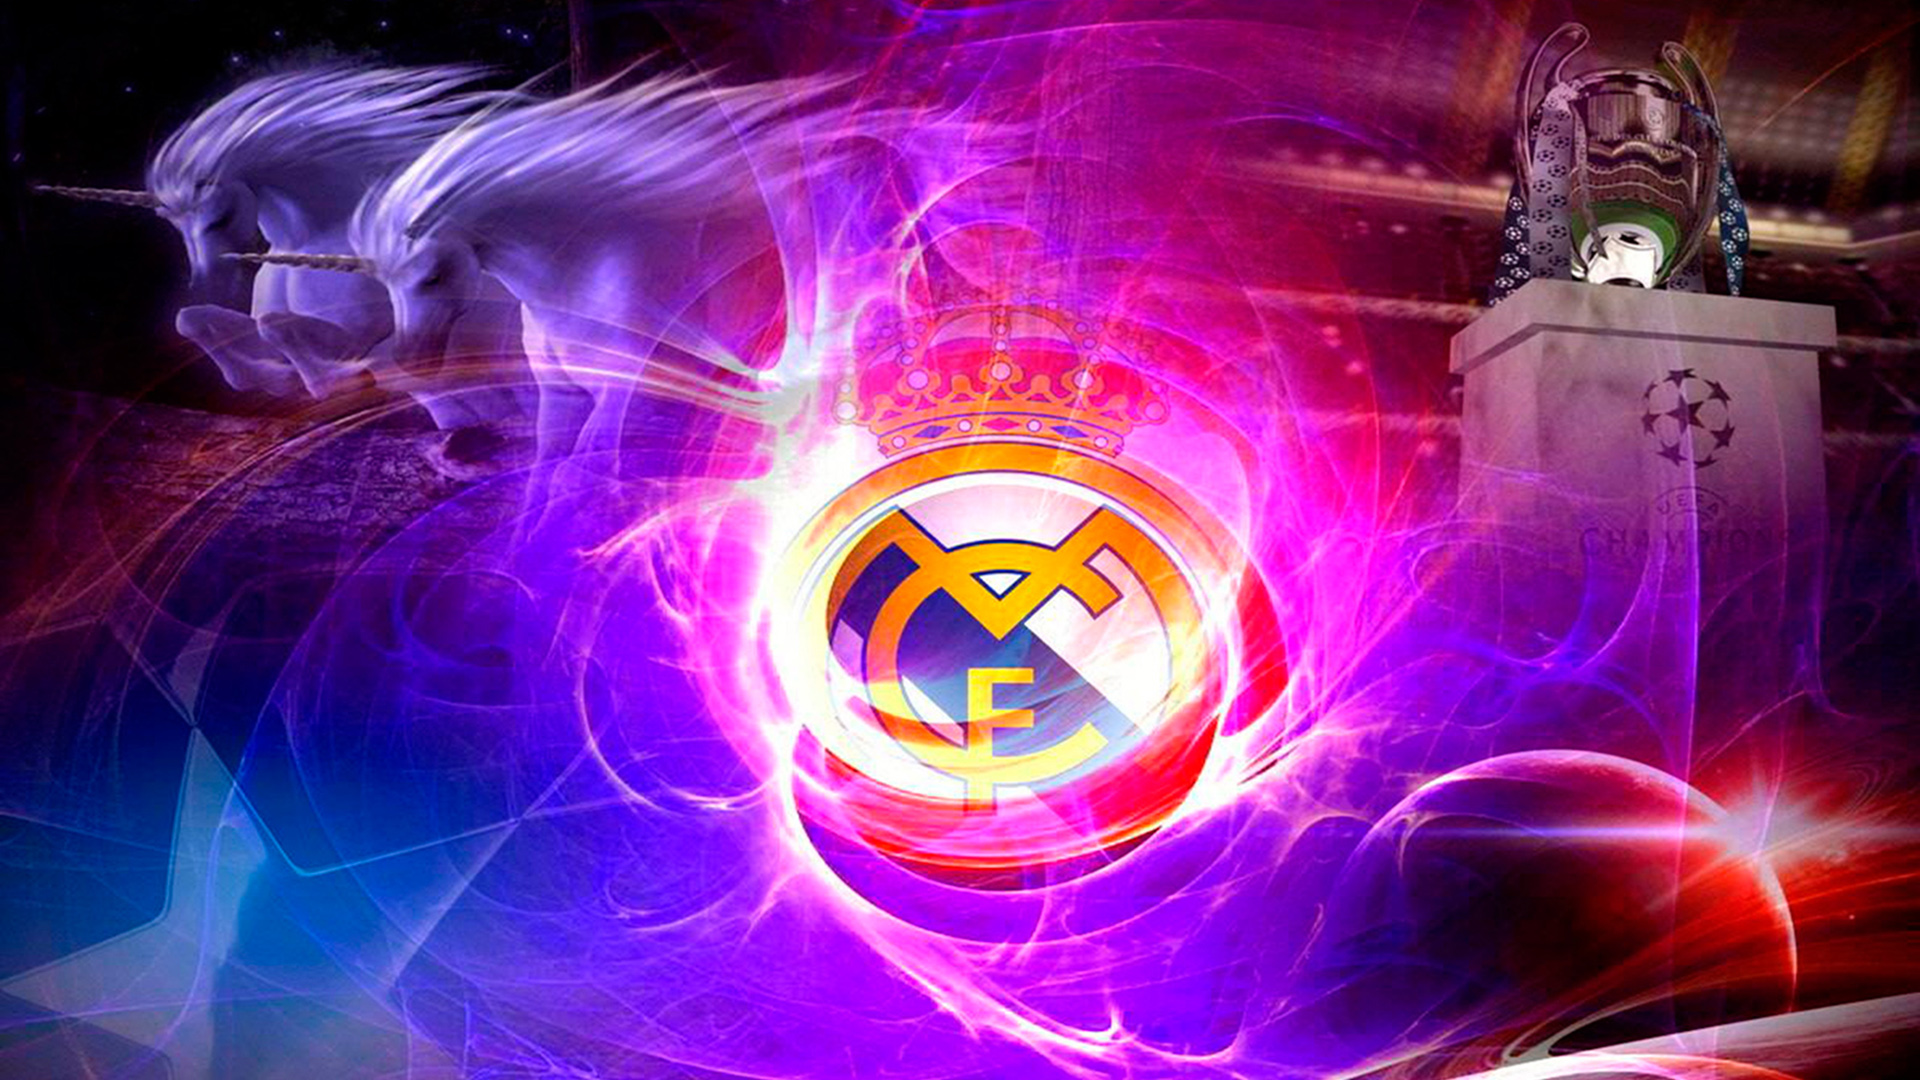 Real Madr - Real Madrid - 1920x1080 Wallpaper 